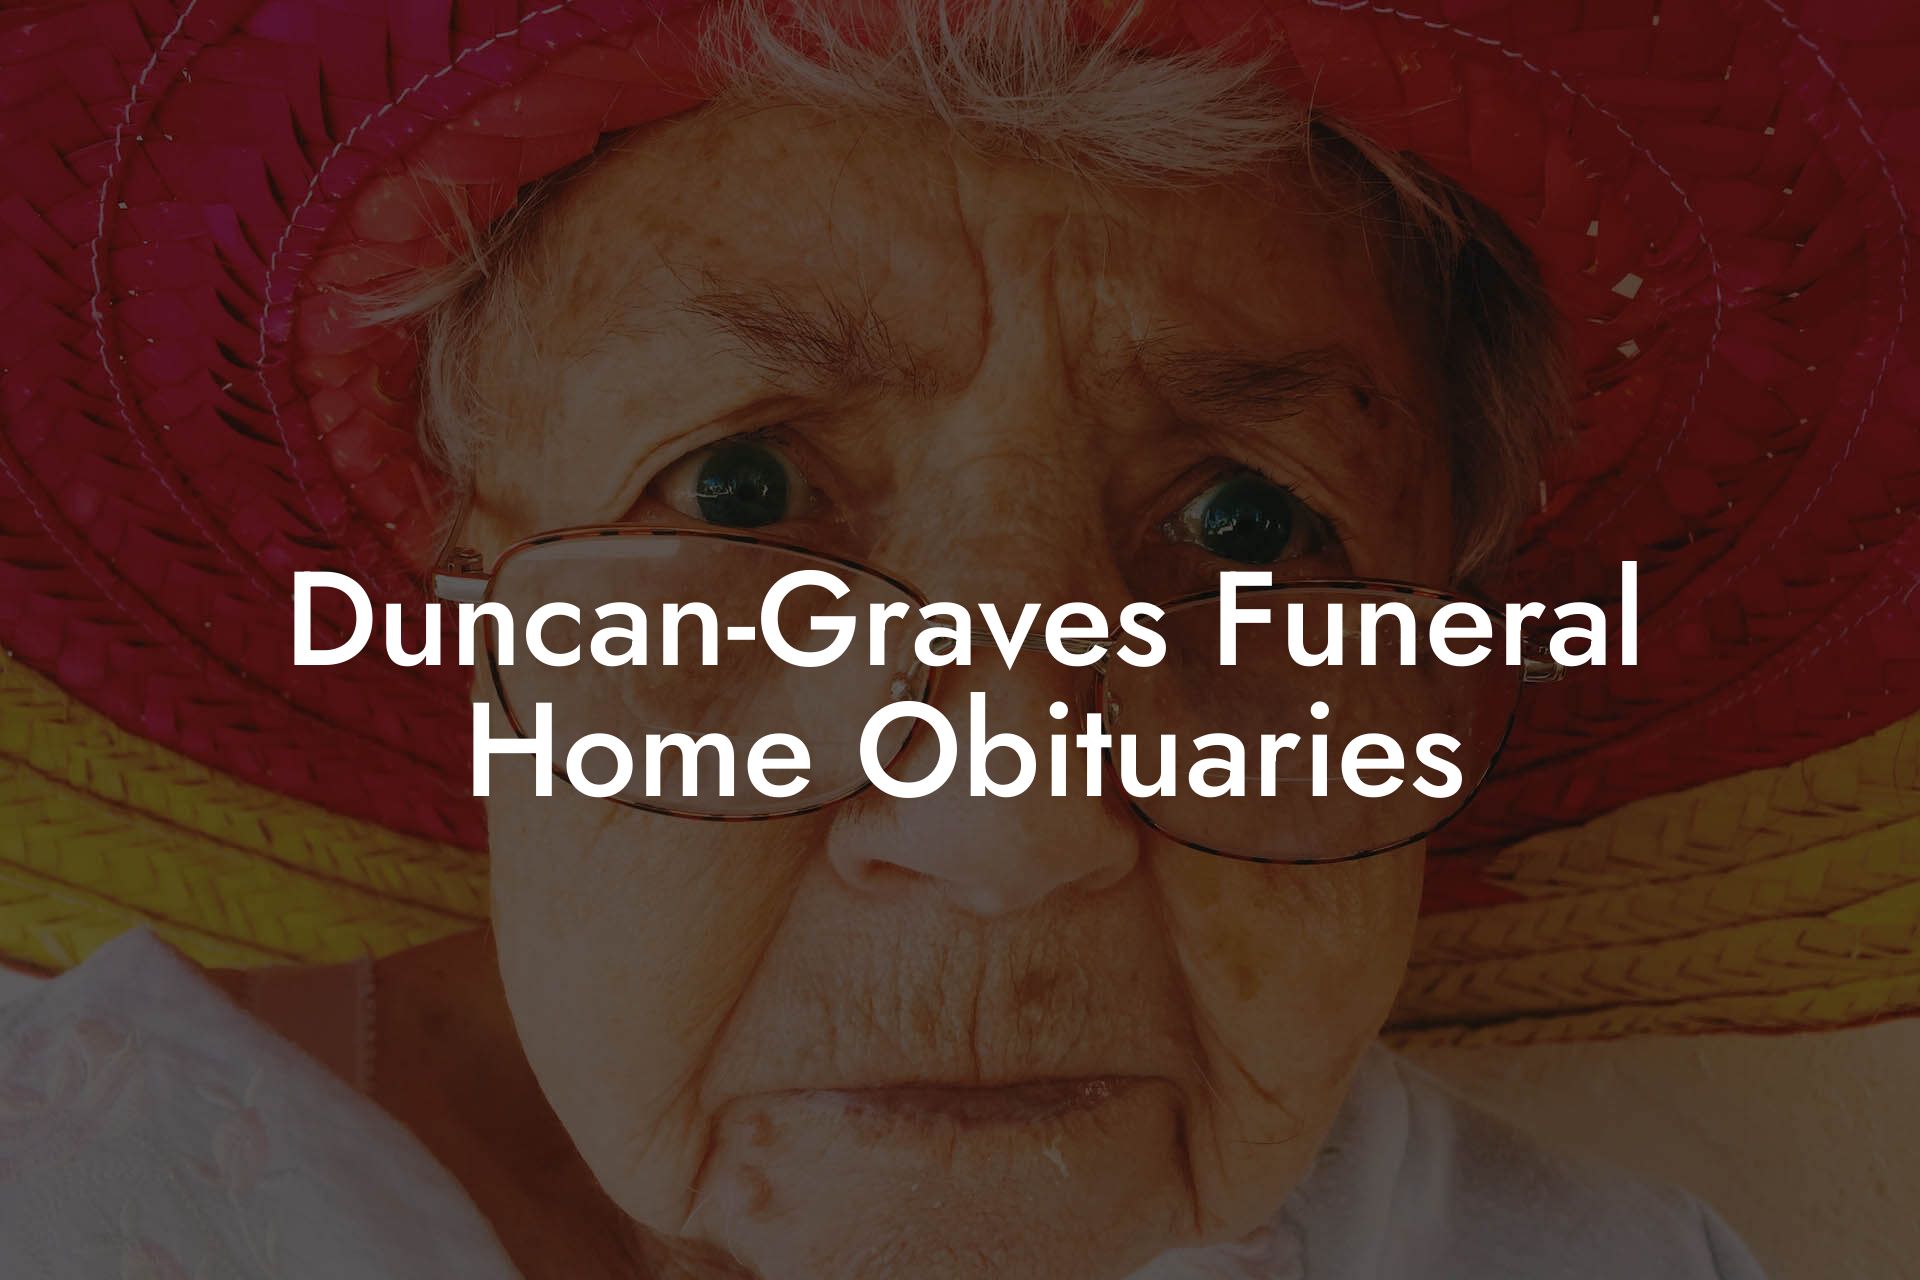 Duncan-Graves Funeral Home Obituaries